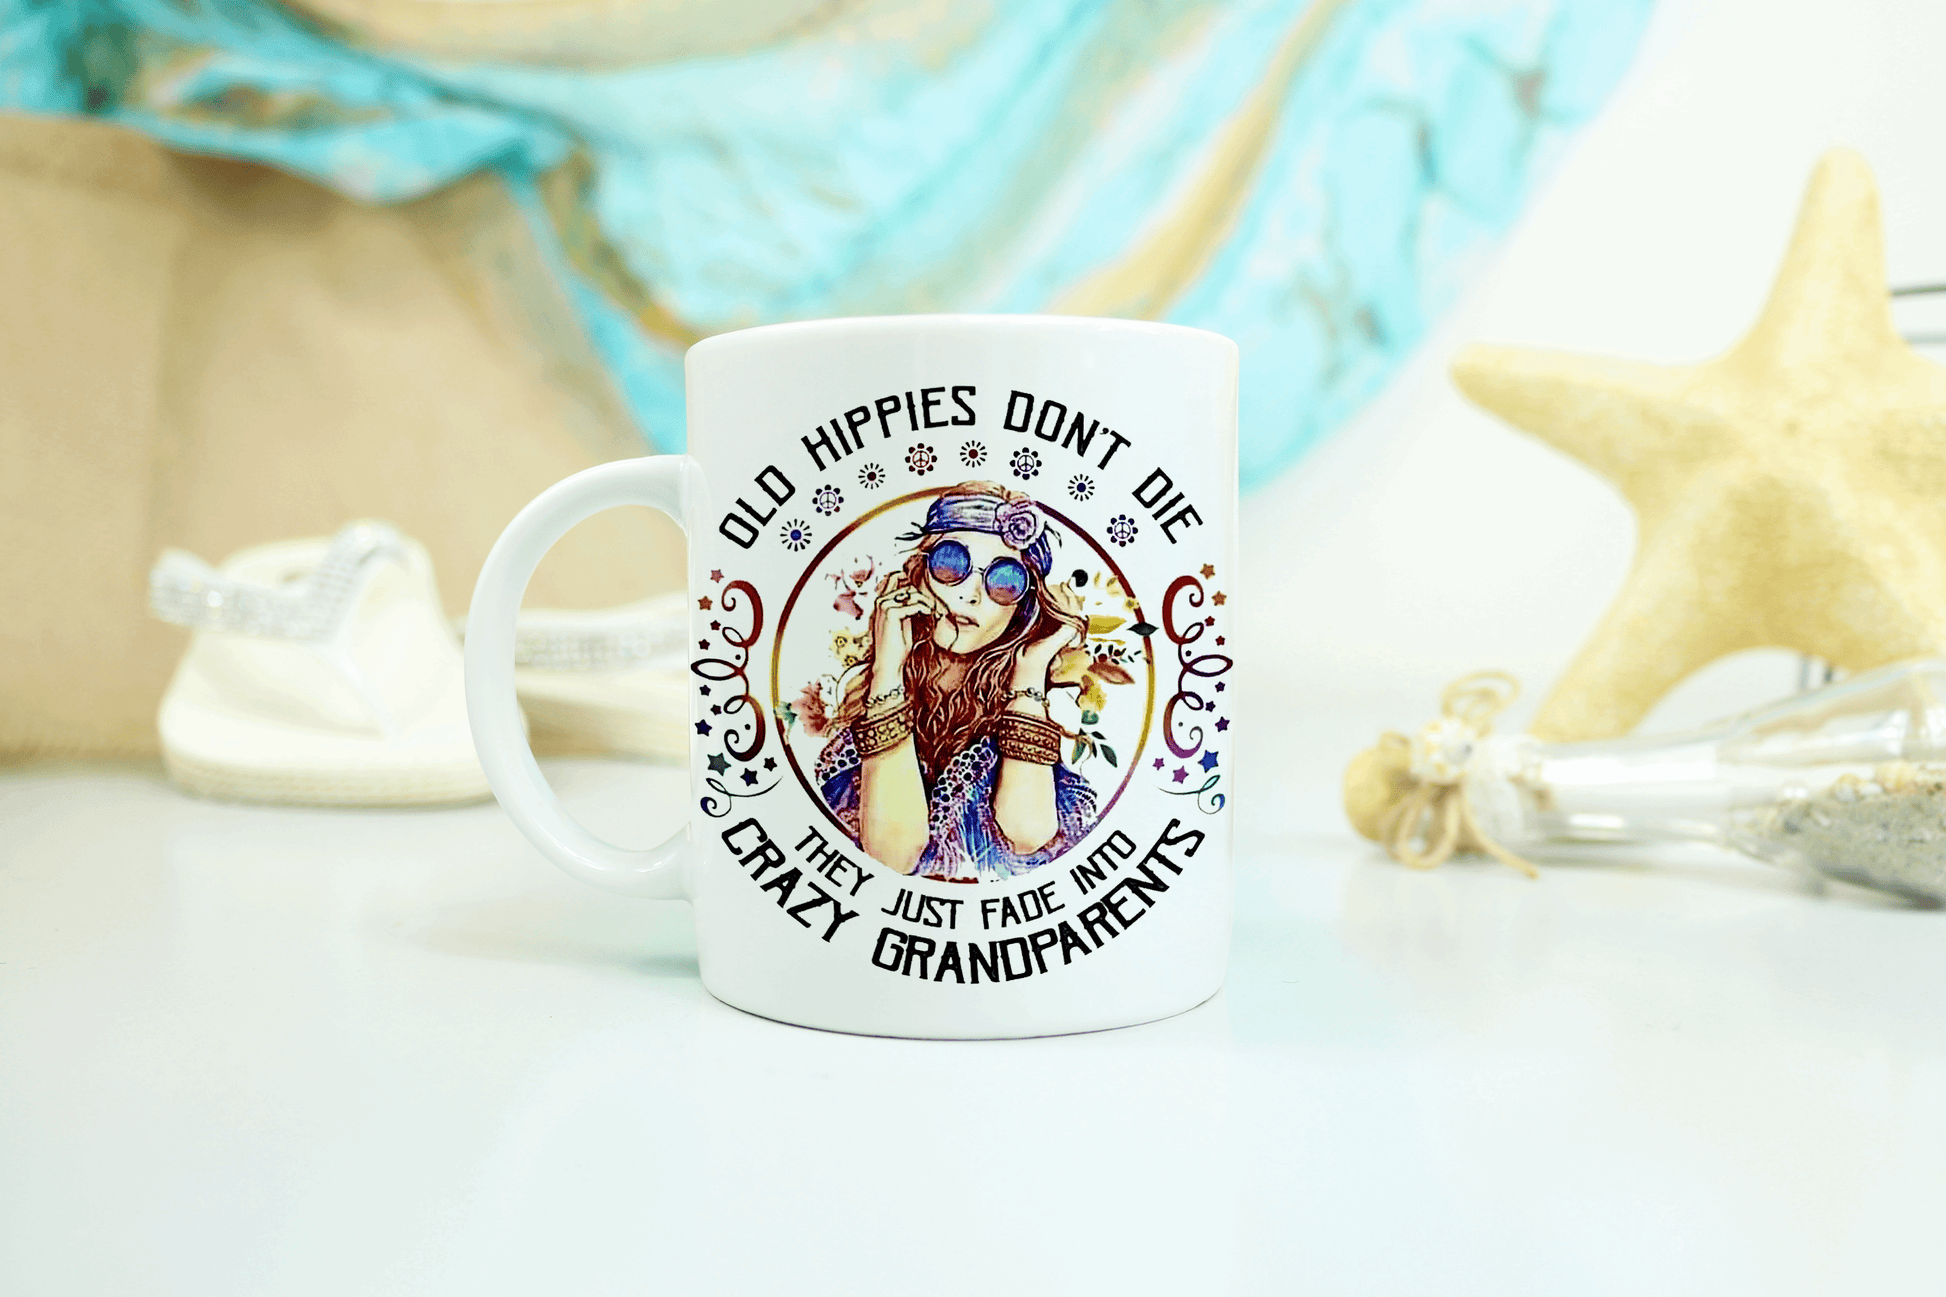  Old Hippies Don't Die Coffee Mug by Free Spirit Accessories sold by Free Spirit Accessories